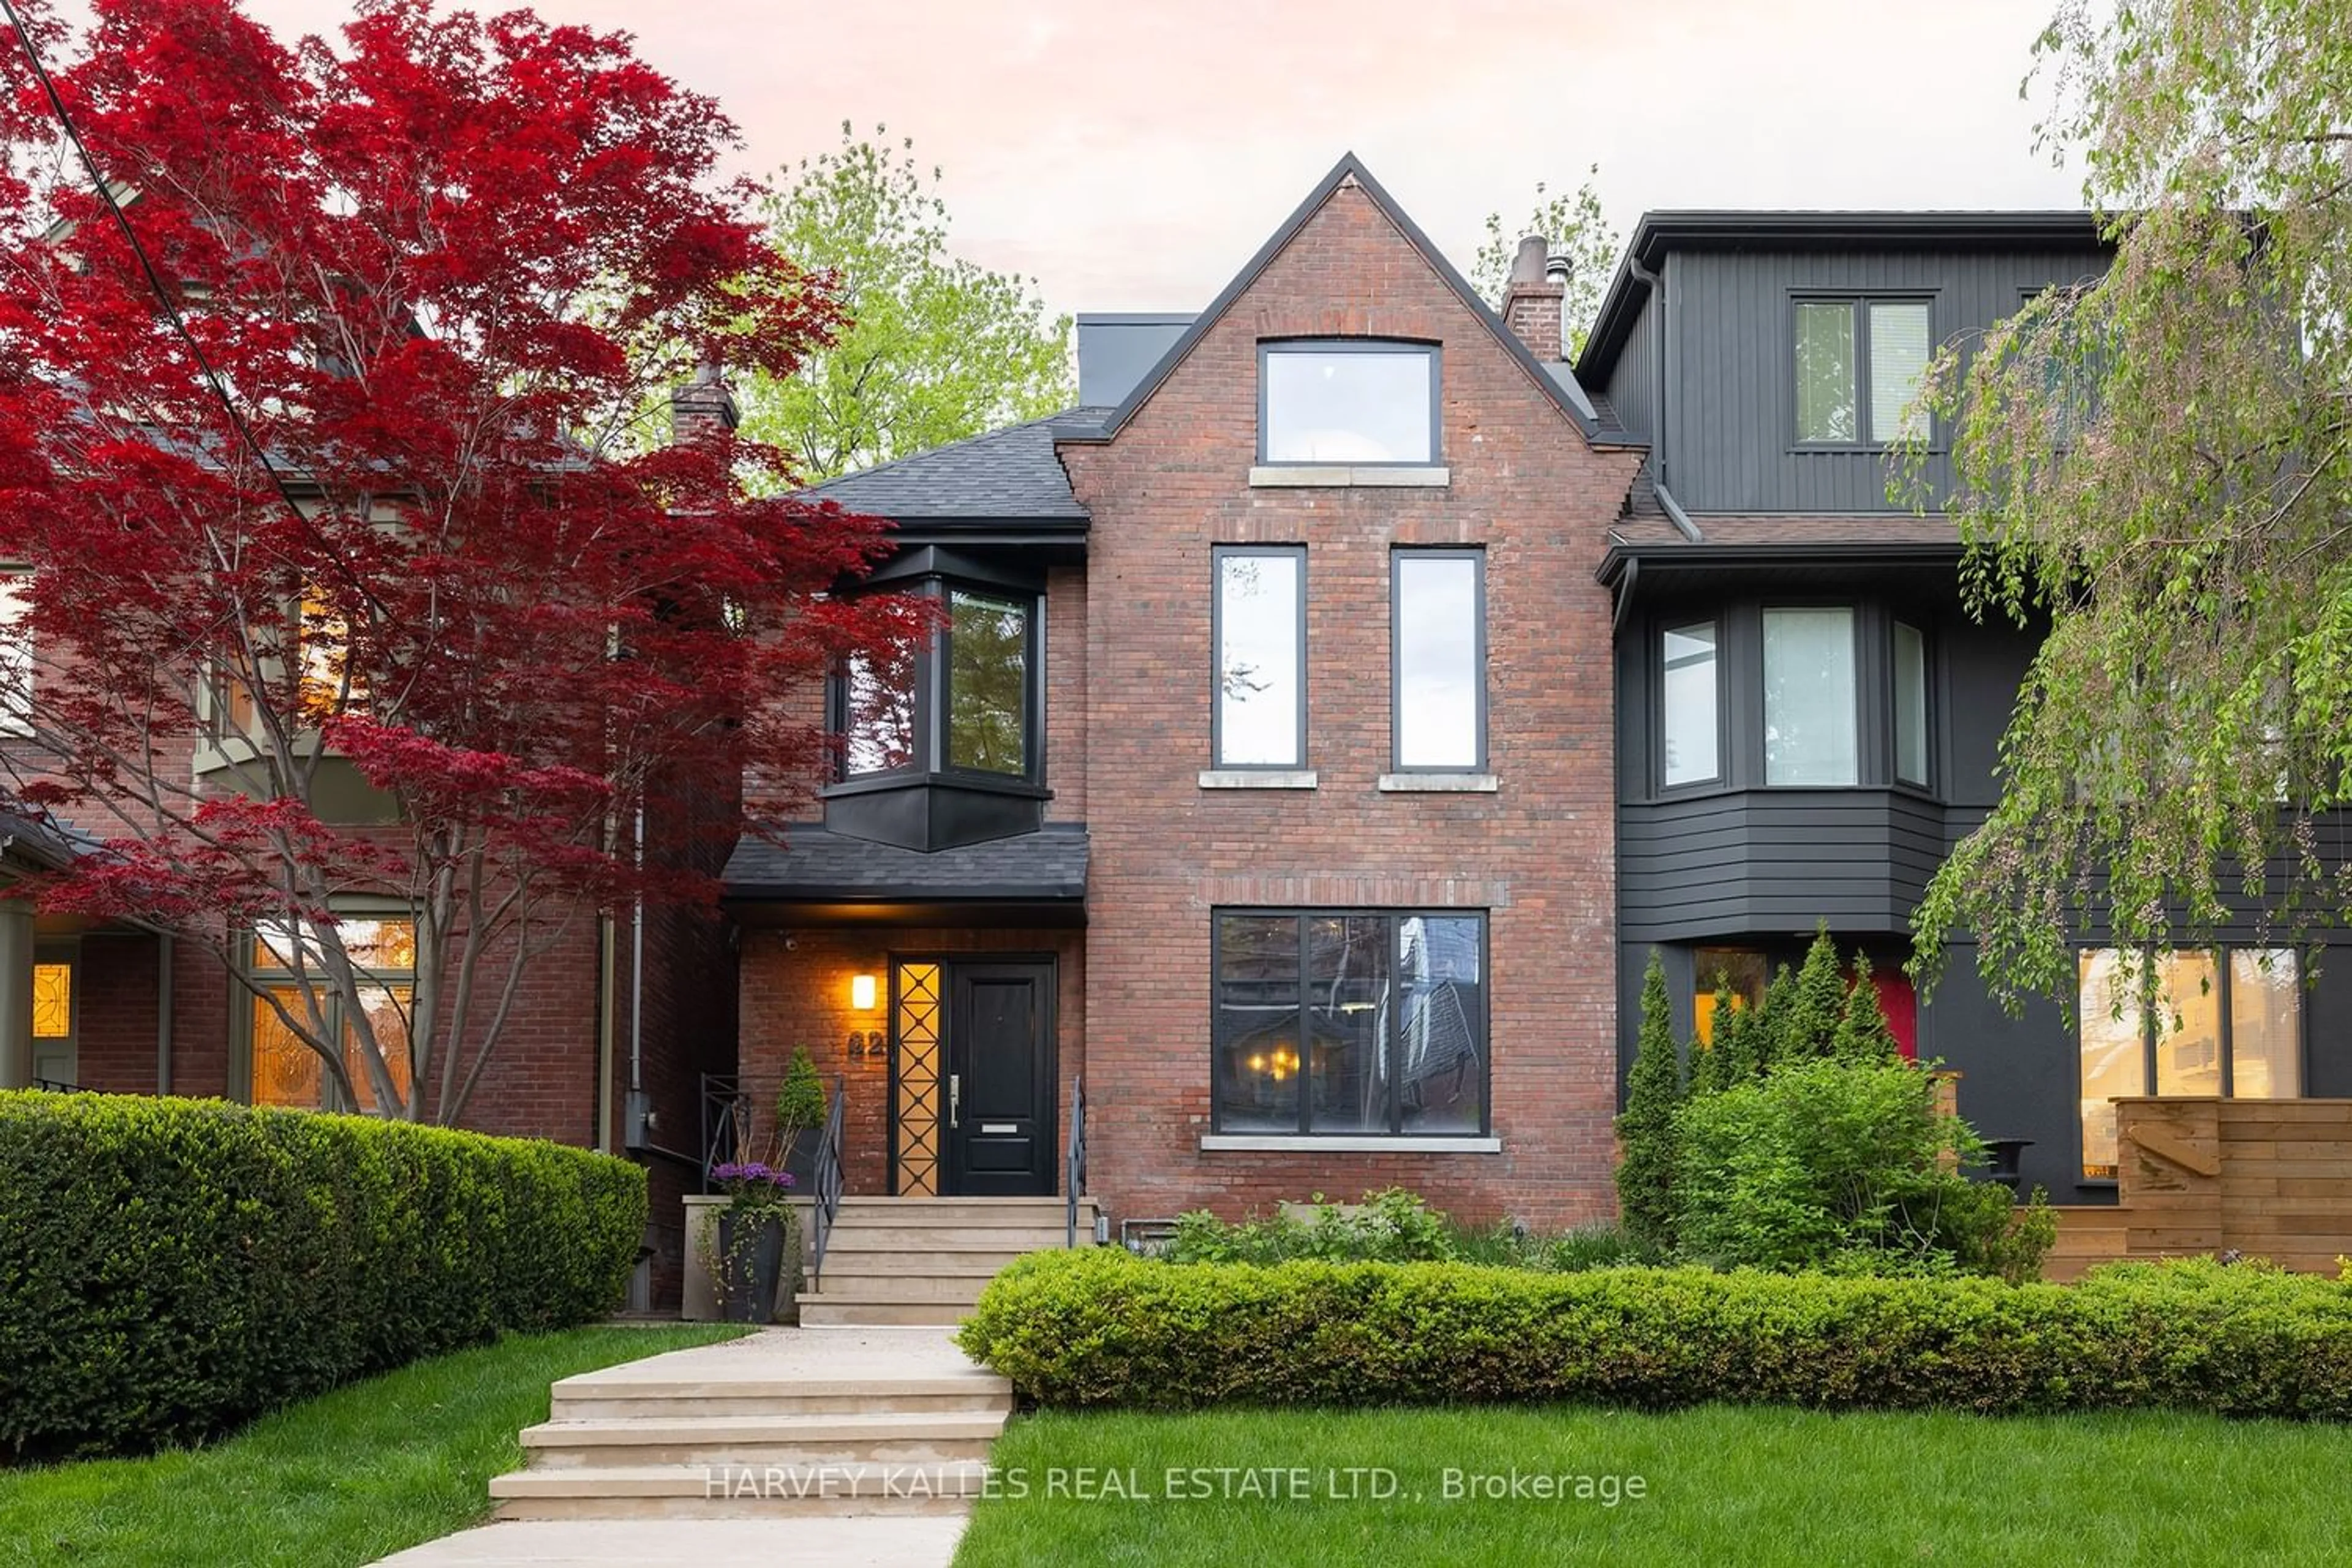 Home with brick exterior material for 82 Roxborough St, Toronto Ontario M5R 1T8